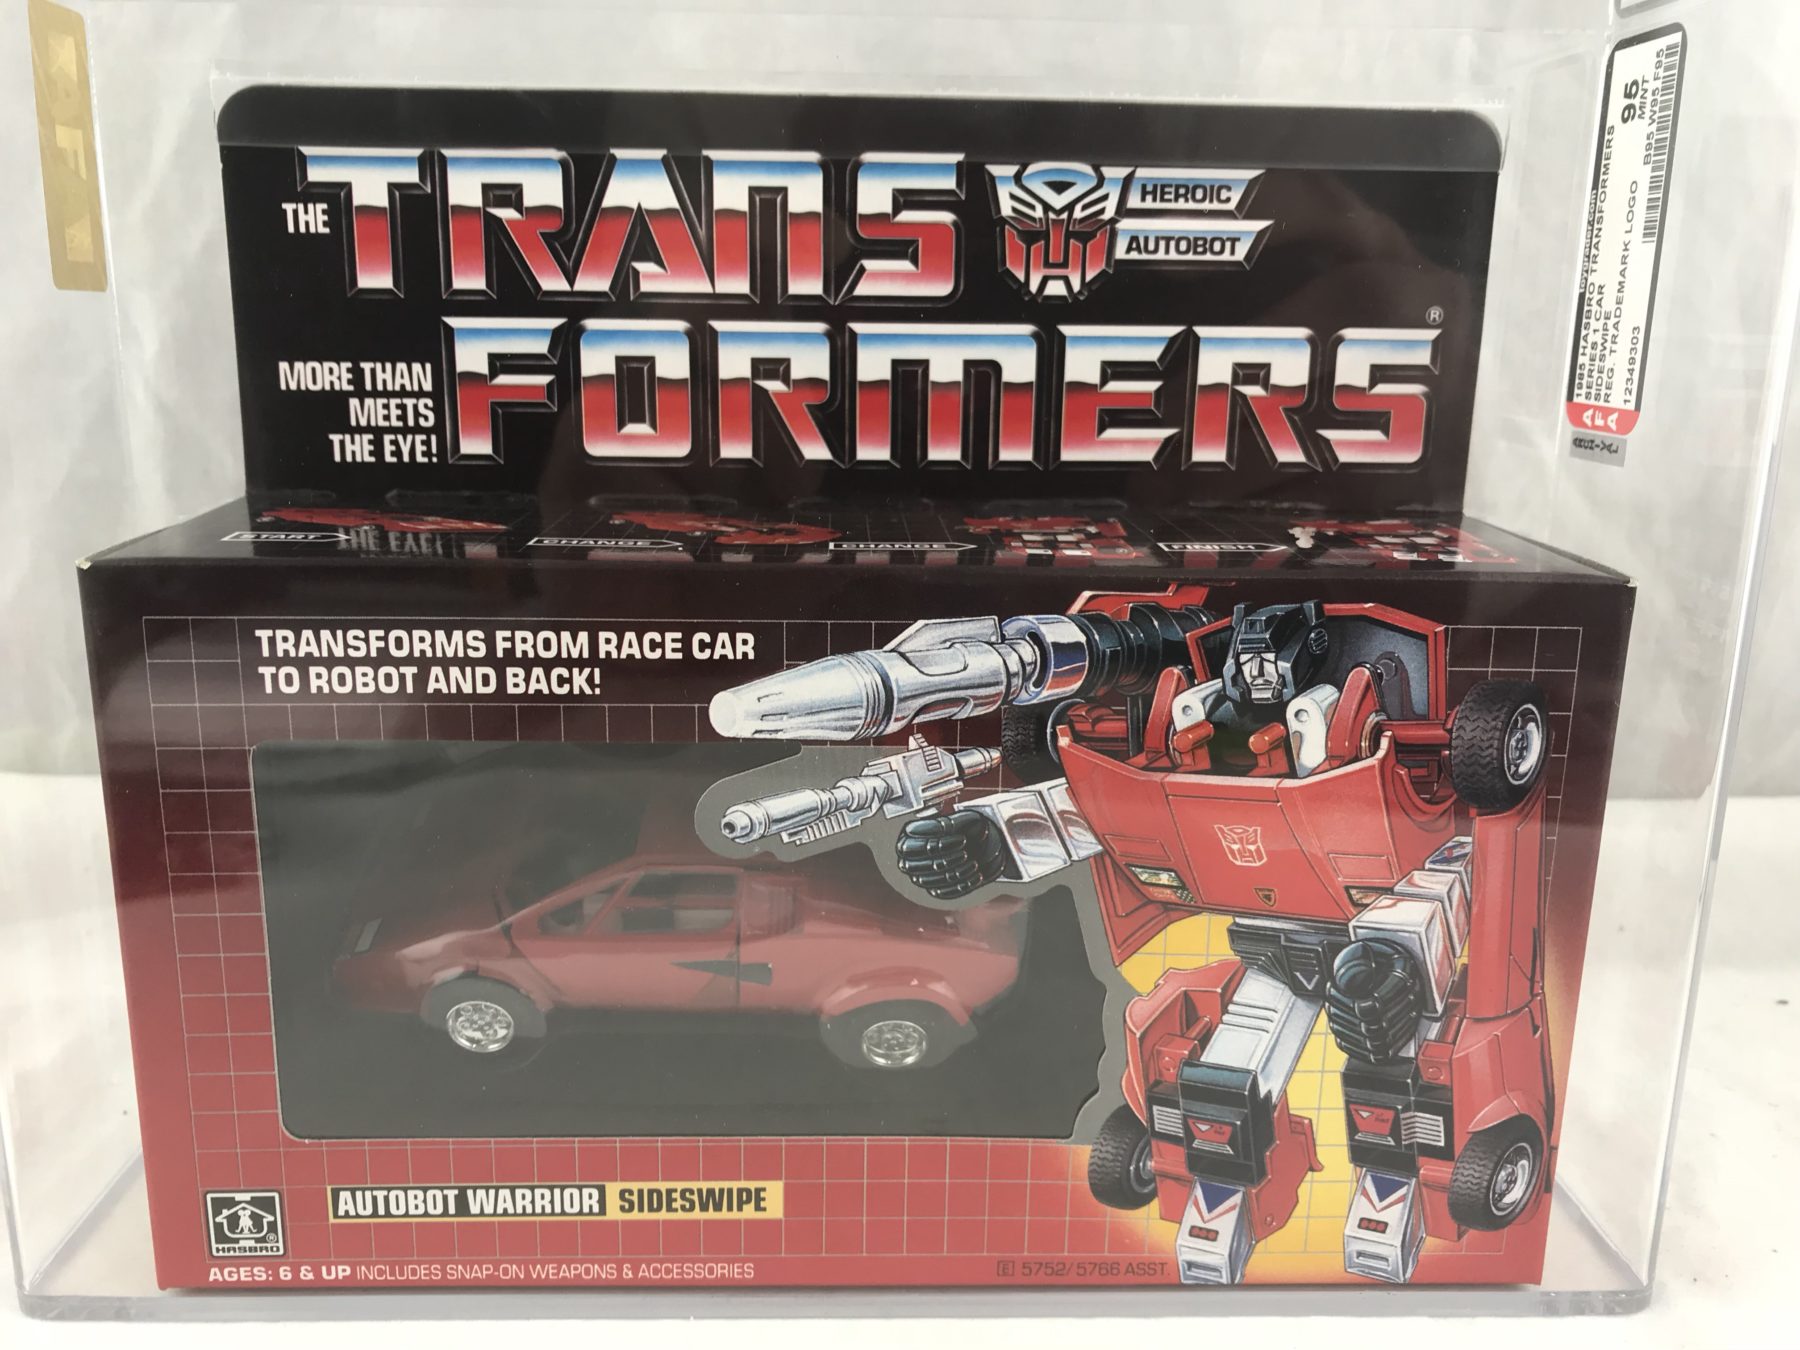 Buying AFA Transformers